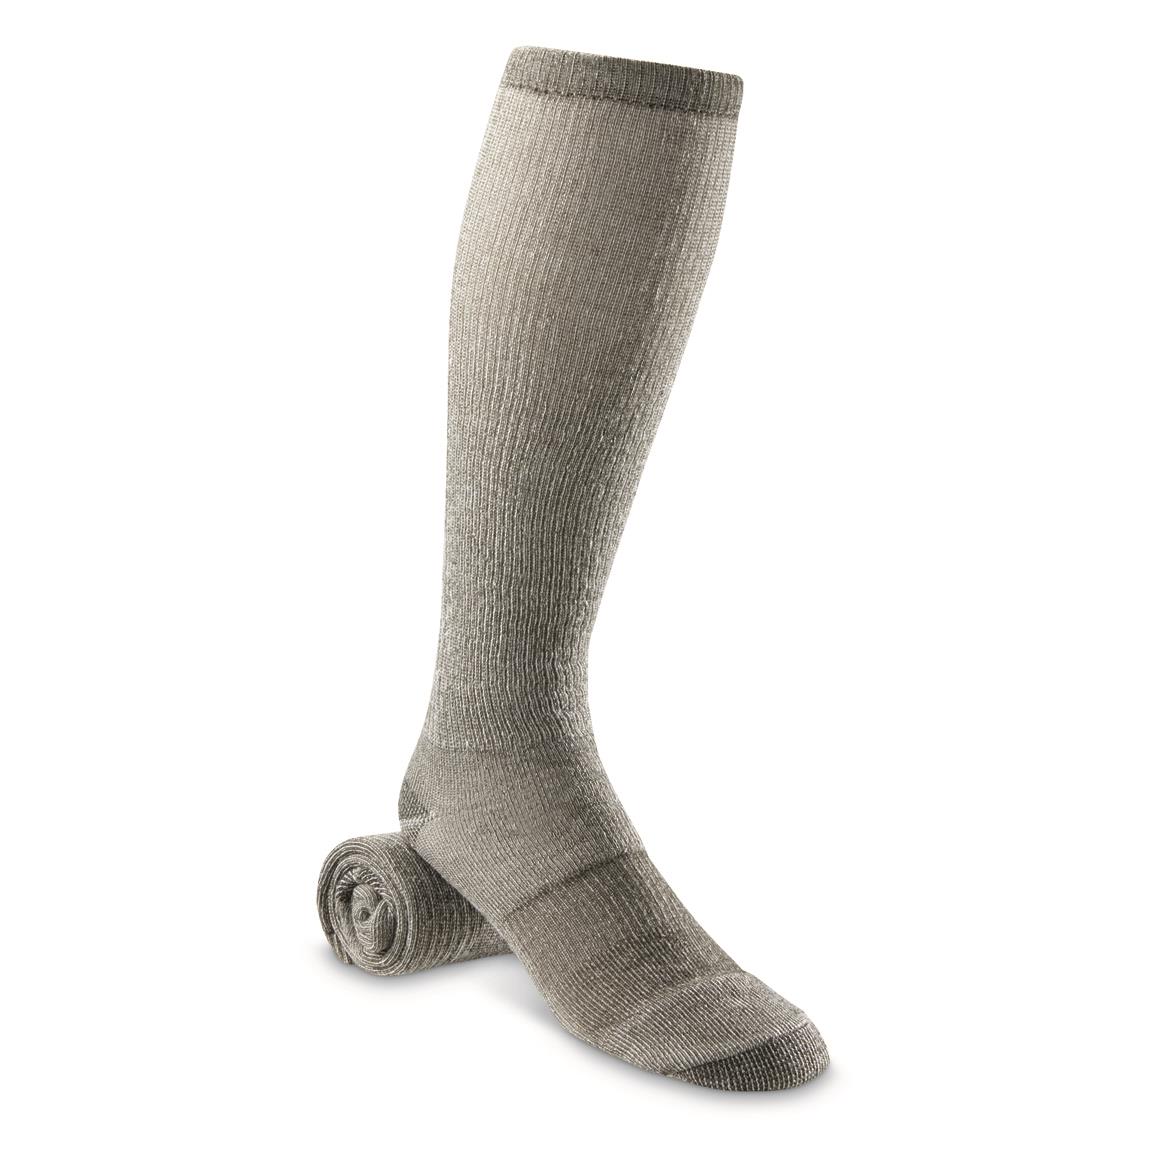 HuntRite 16" Wool-blend Socks, 6 Pairs, Olive